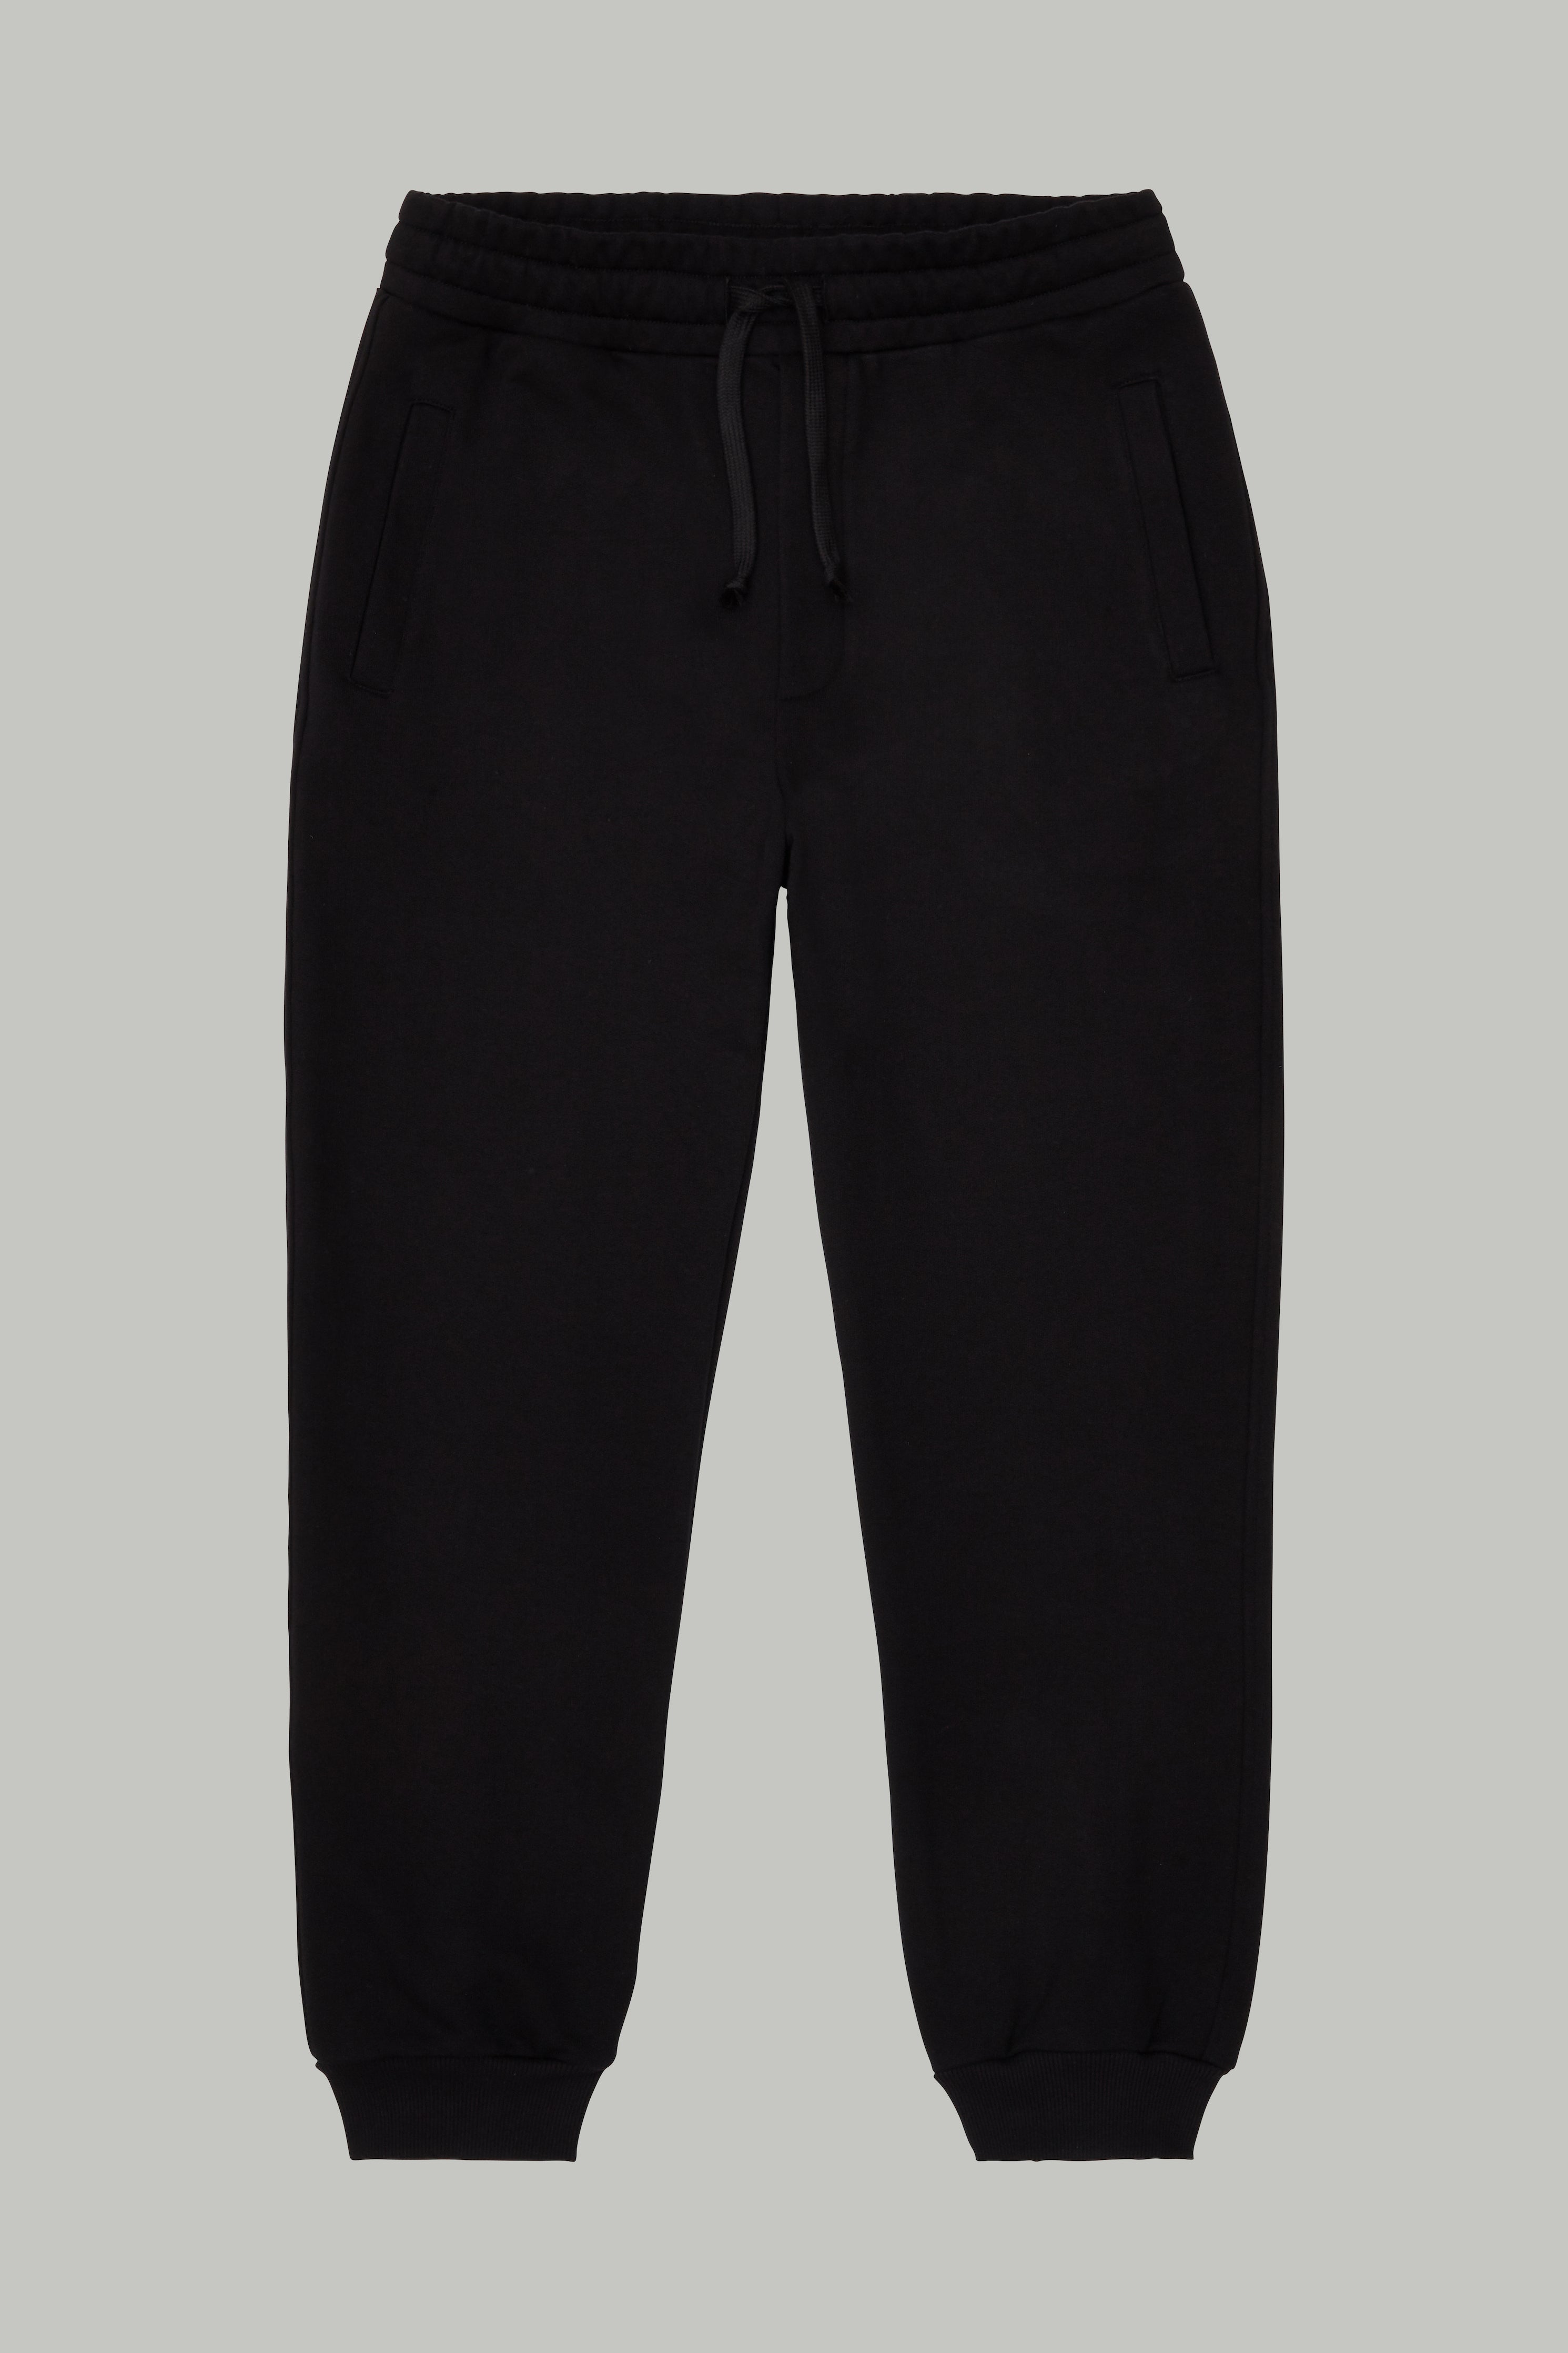 Black - Greggio Blanks Sweatpant SW1 Sample - Black - Luxury Made in Italy Wholesale Streetwear